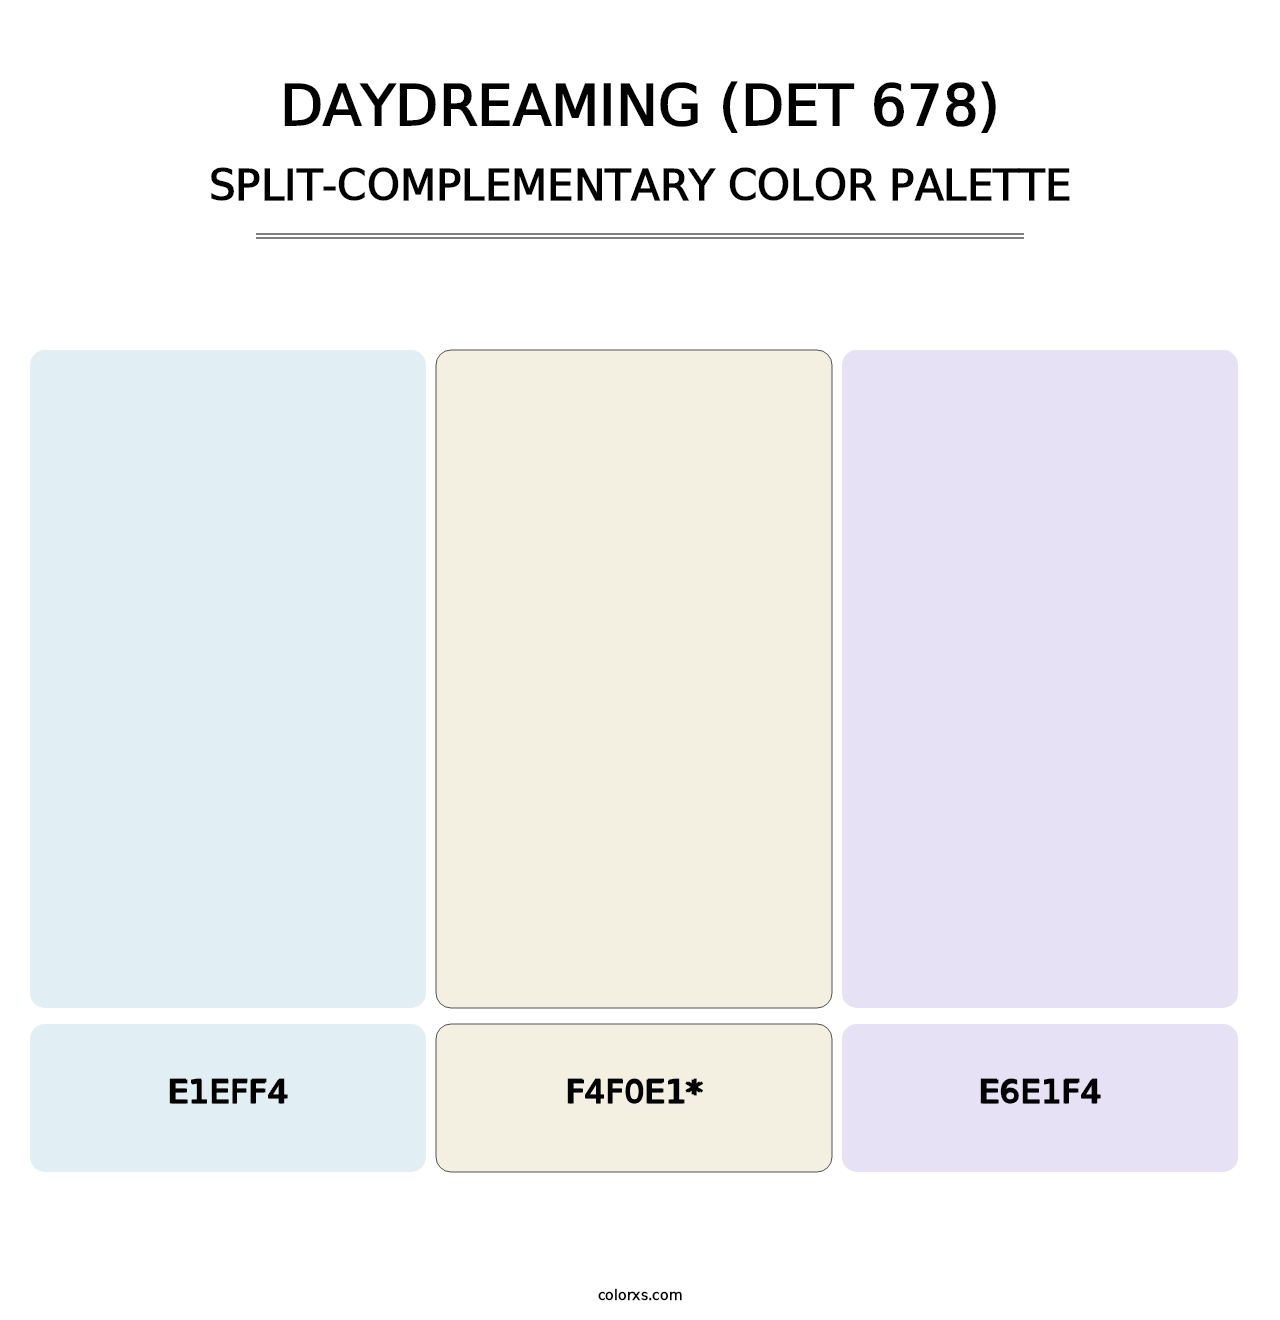 Daydreaming (DET 678) - Split-Complementary Color Palette